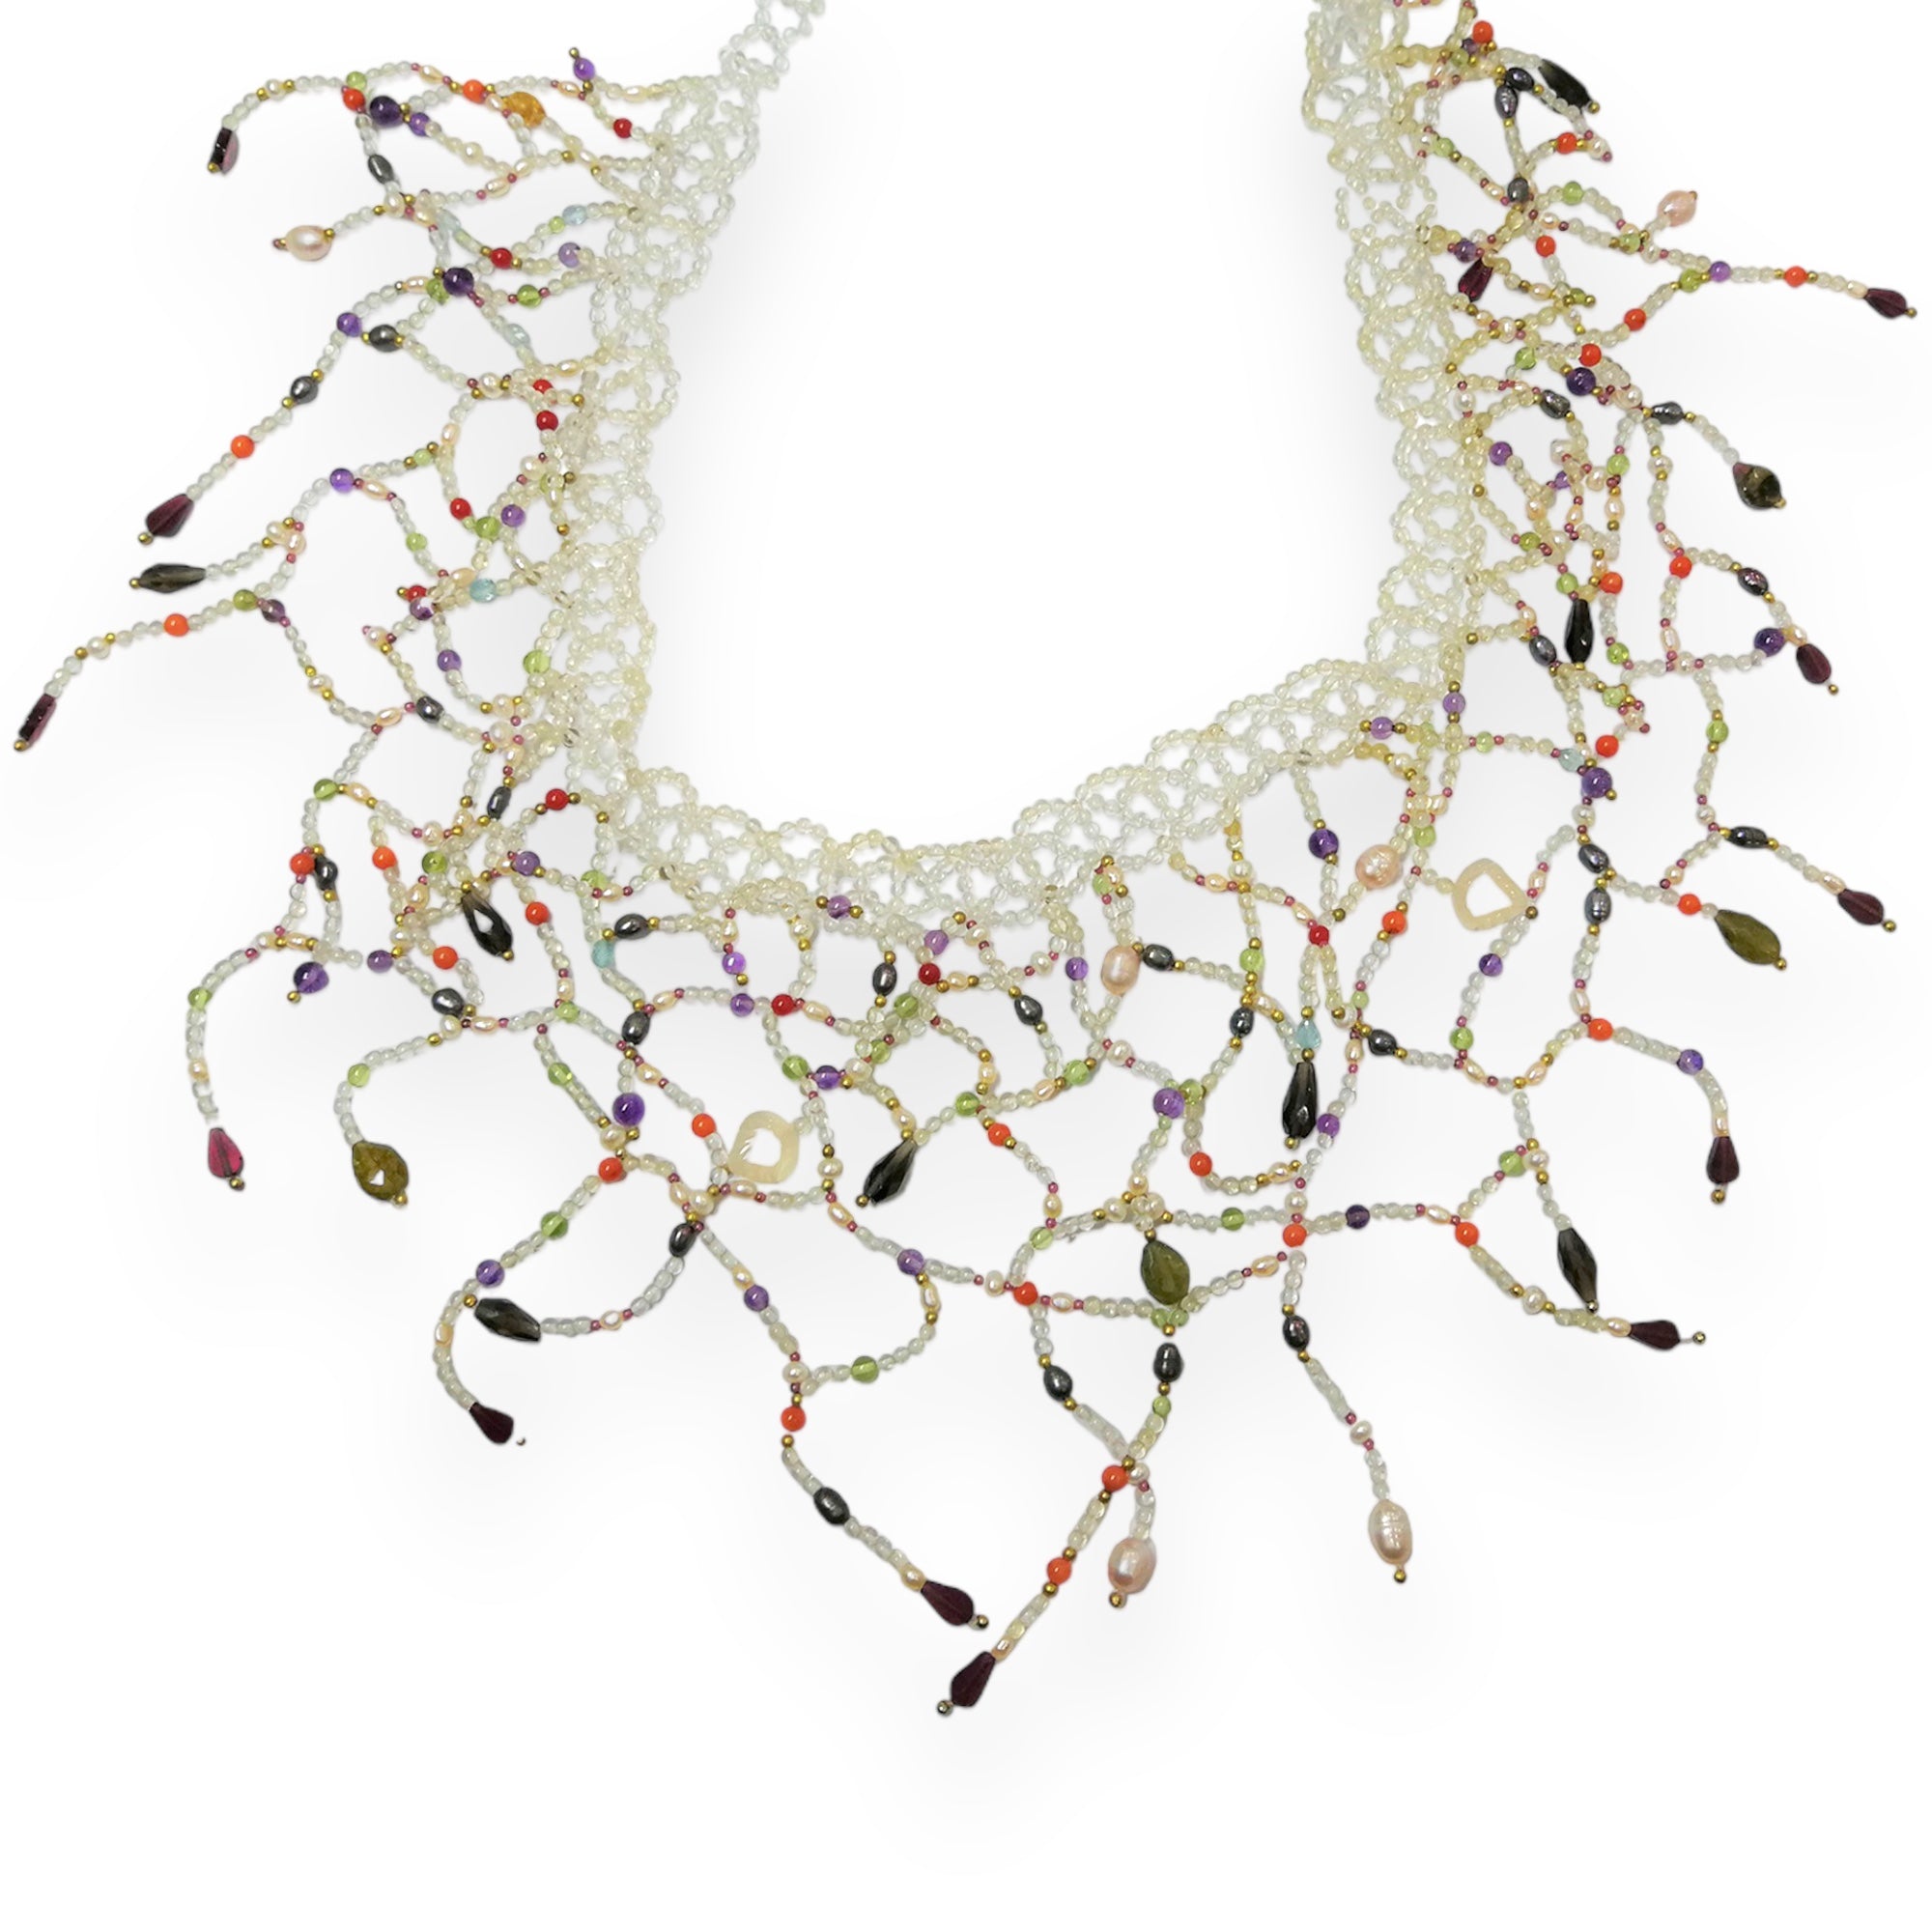 Natural Handmade Necklace 16"-18" Peridot, Coral, Garnet with Tourmaline, Citrine, Amethyst, Peridot, White Topaz Gemstone Beads Jewellery